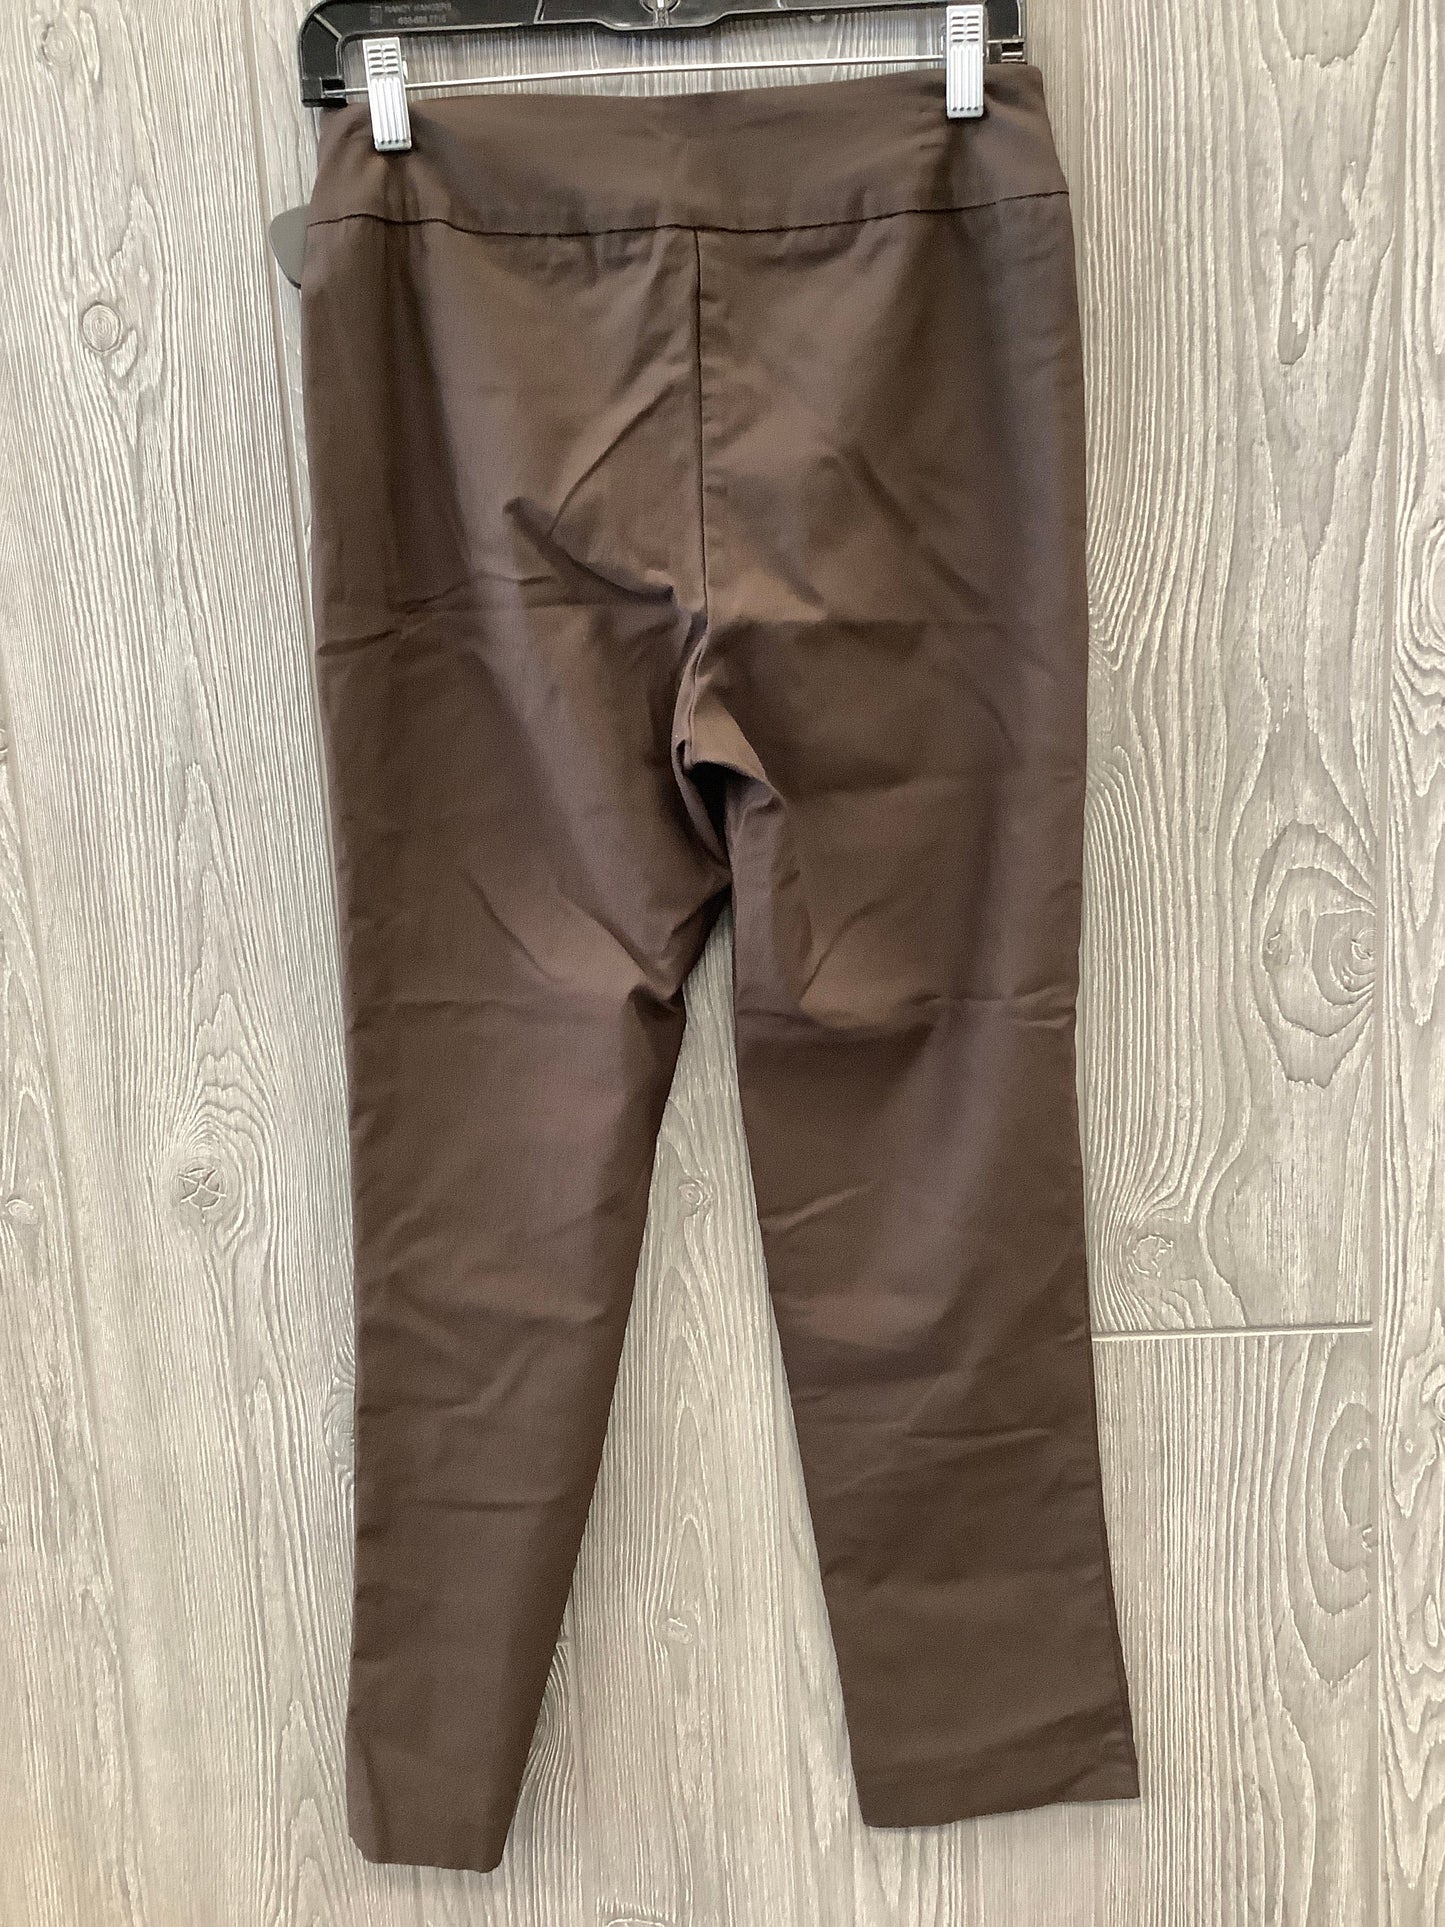 Brown Pants Dress Clothes Mentor, Size 8